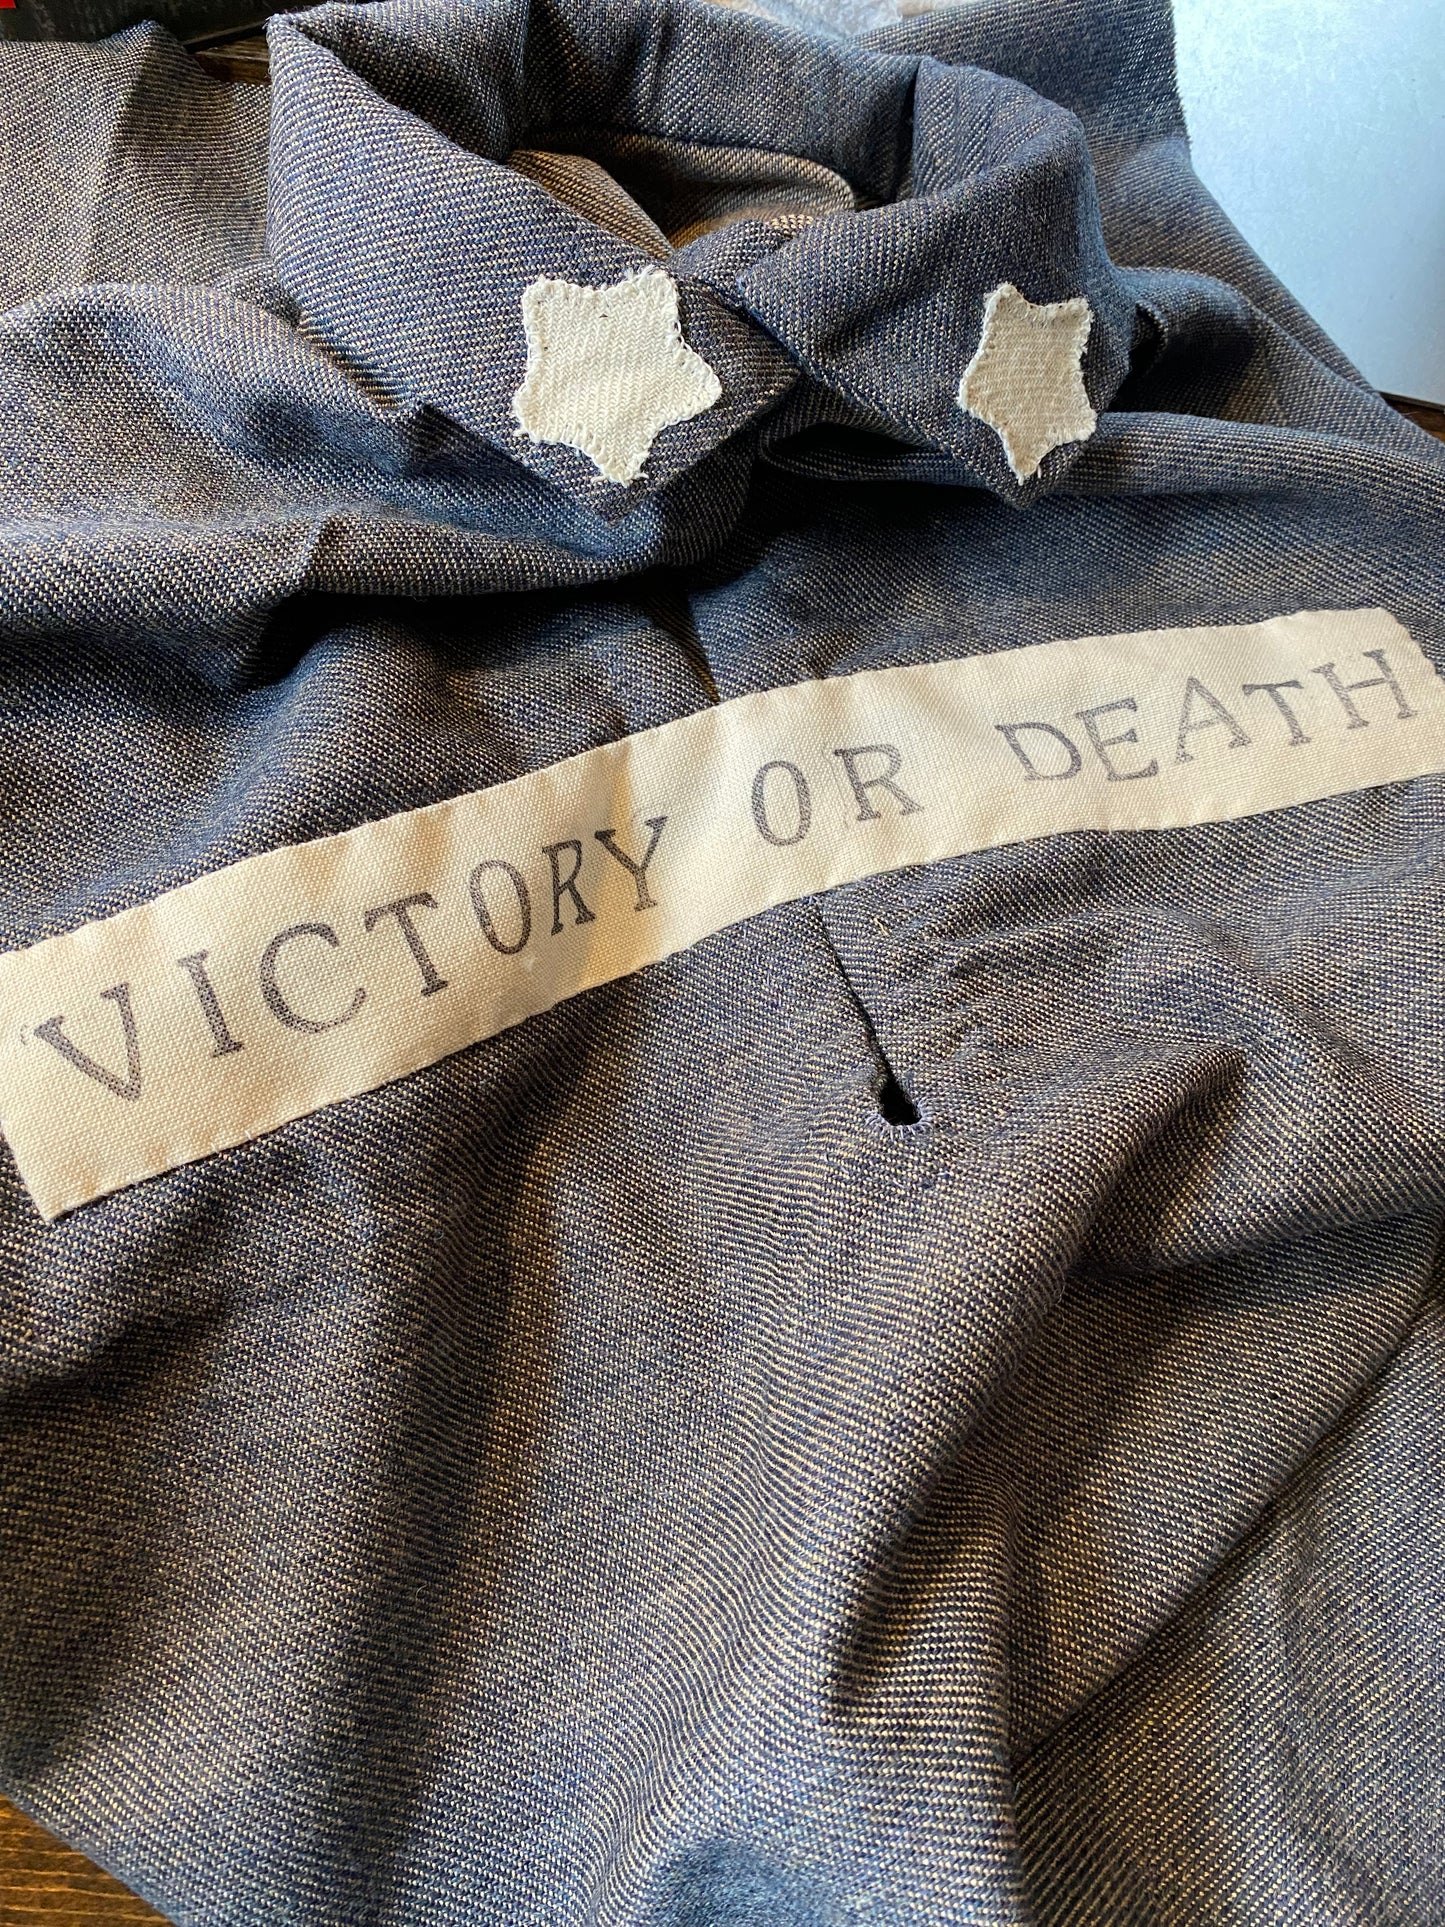 "Victory or Death" Mississippi Overshirt - Manassas Junction 1861